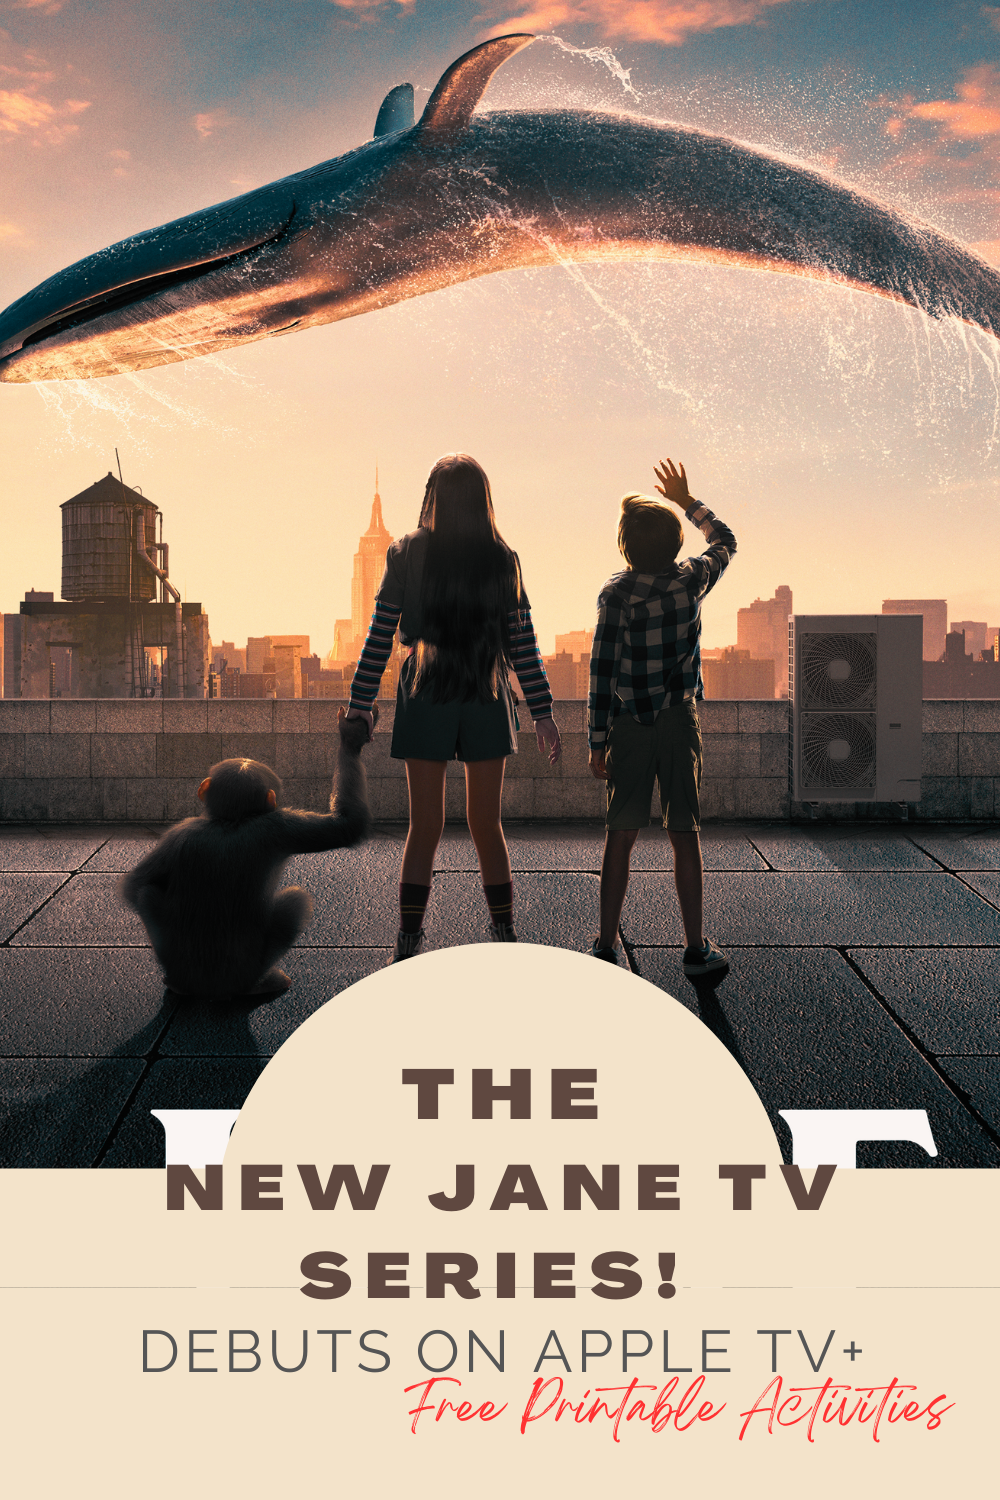 Apple TV+ Series Jane, Debuts on April 14th | Free Printables Inside post thumbnail image